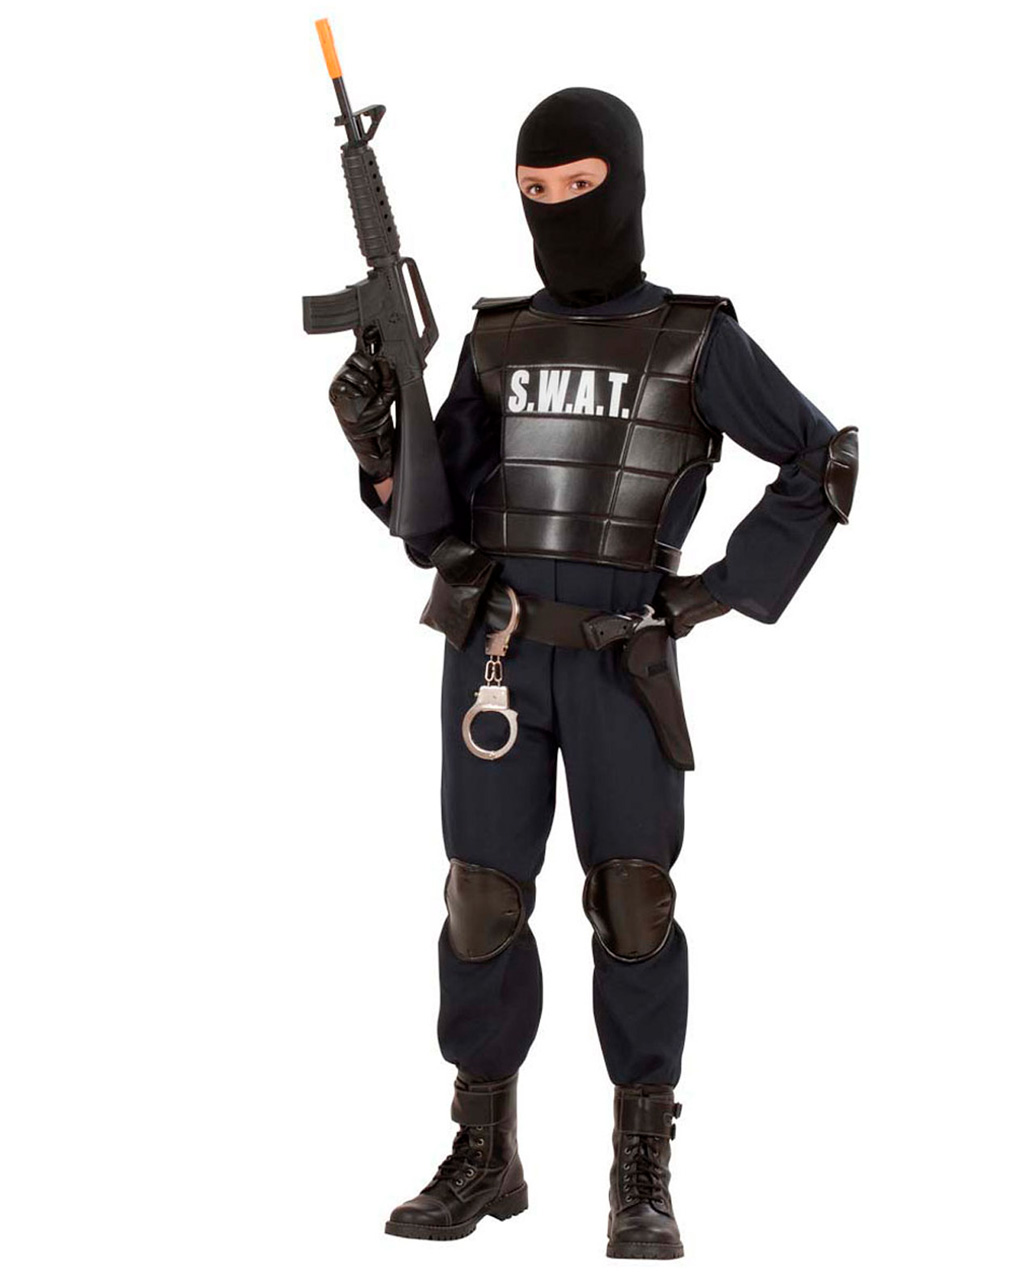 swat uniform costume